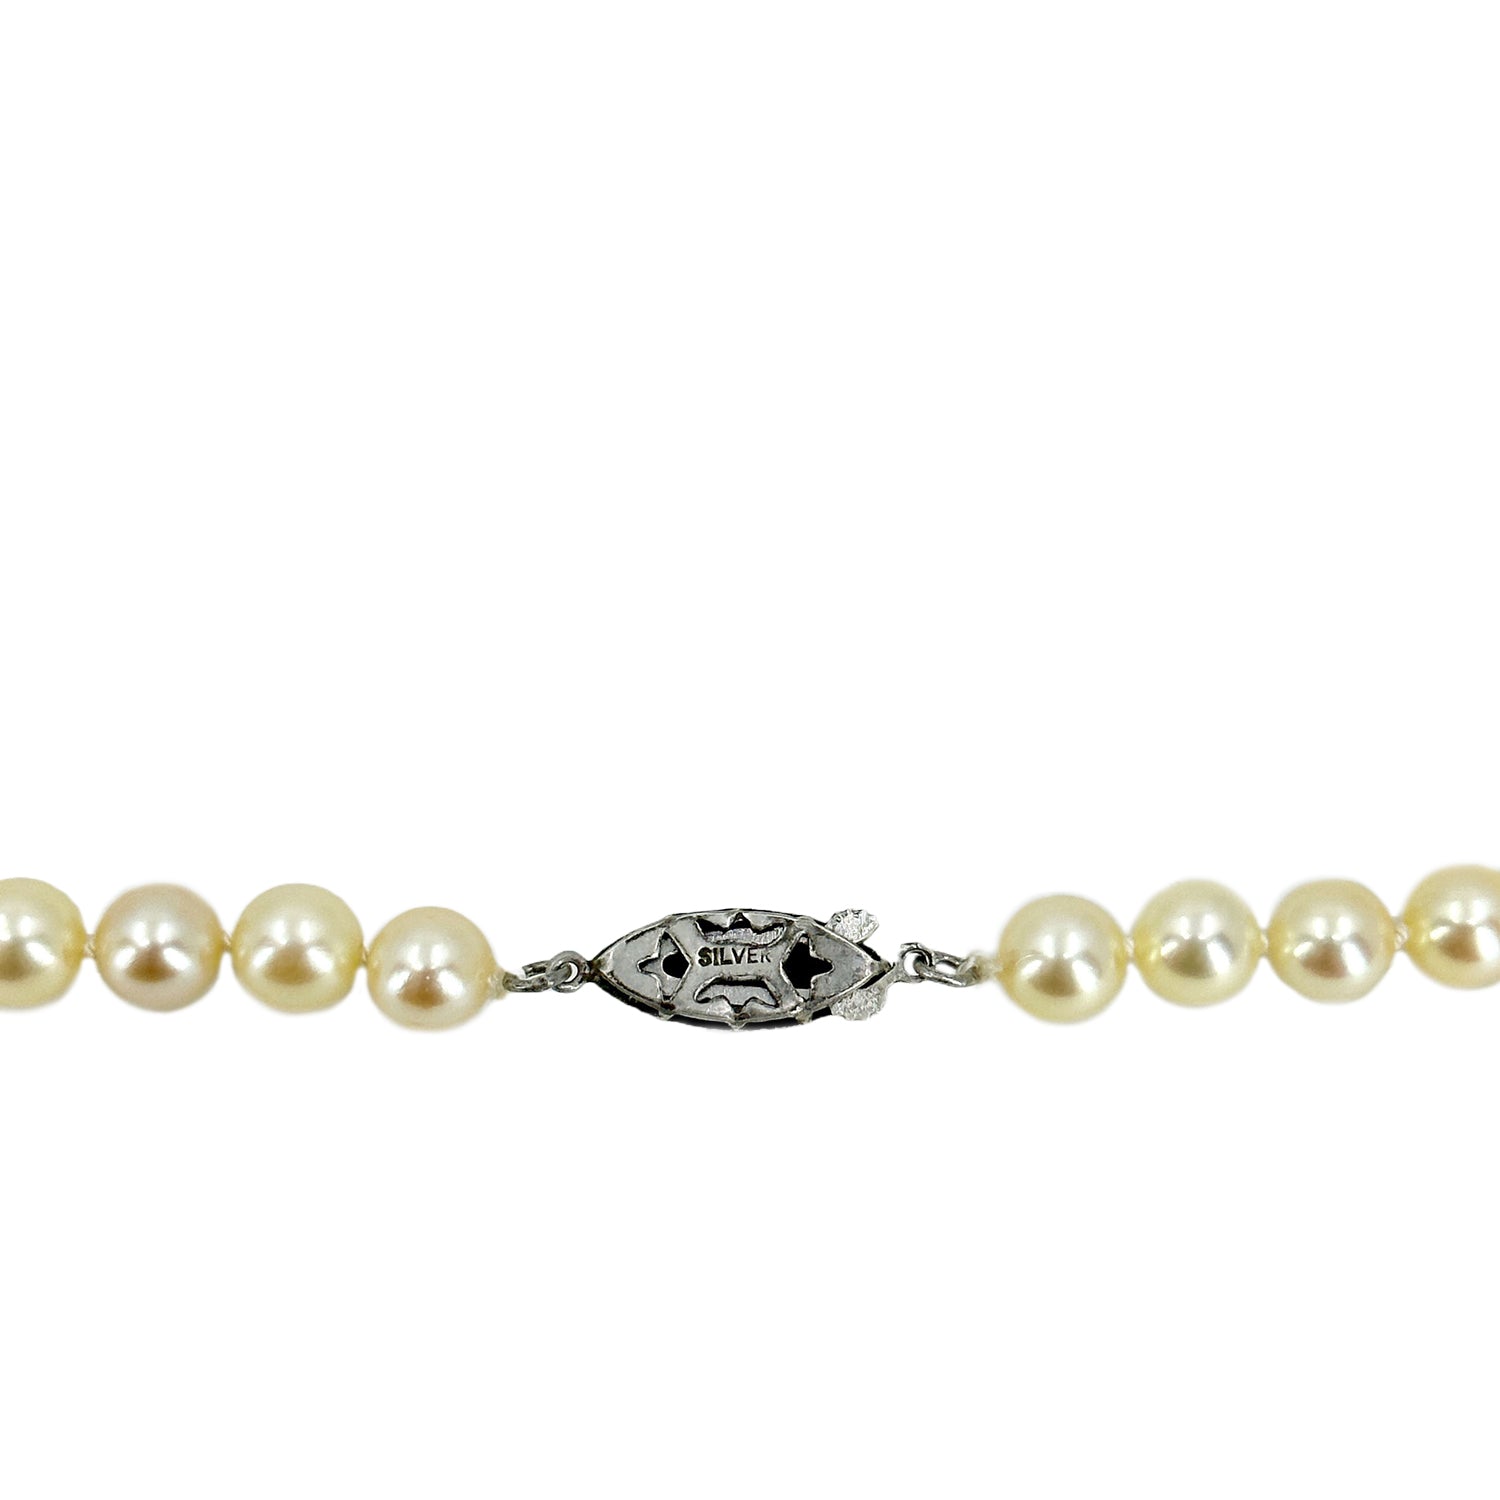 Golden Cream Vintage Japanese Saltwater Cultured Akoya Pearl Vintage Necklace - Sterling Silver 23 Inch